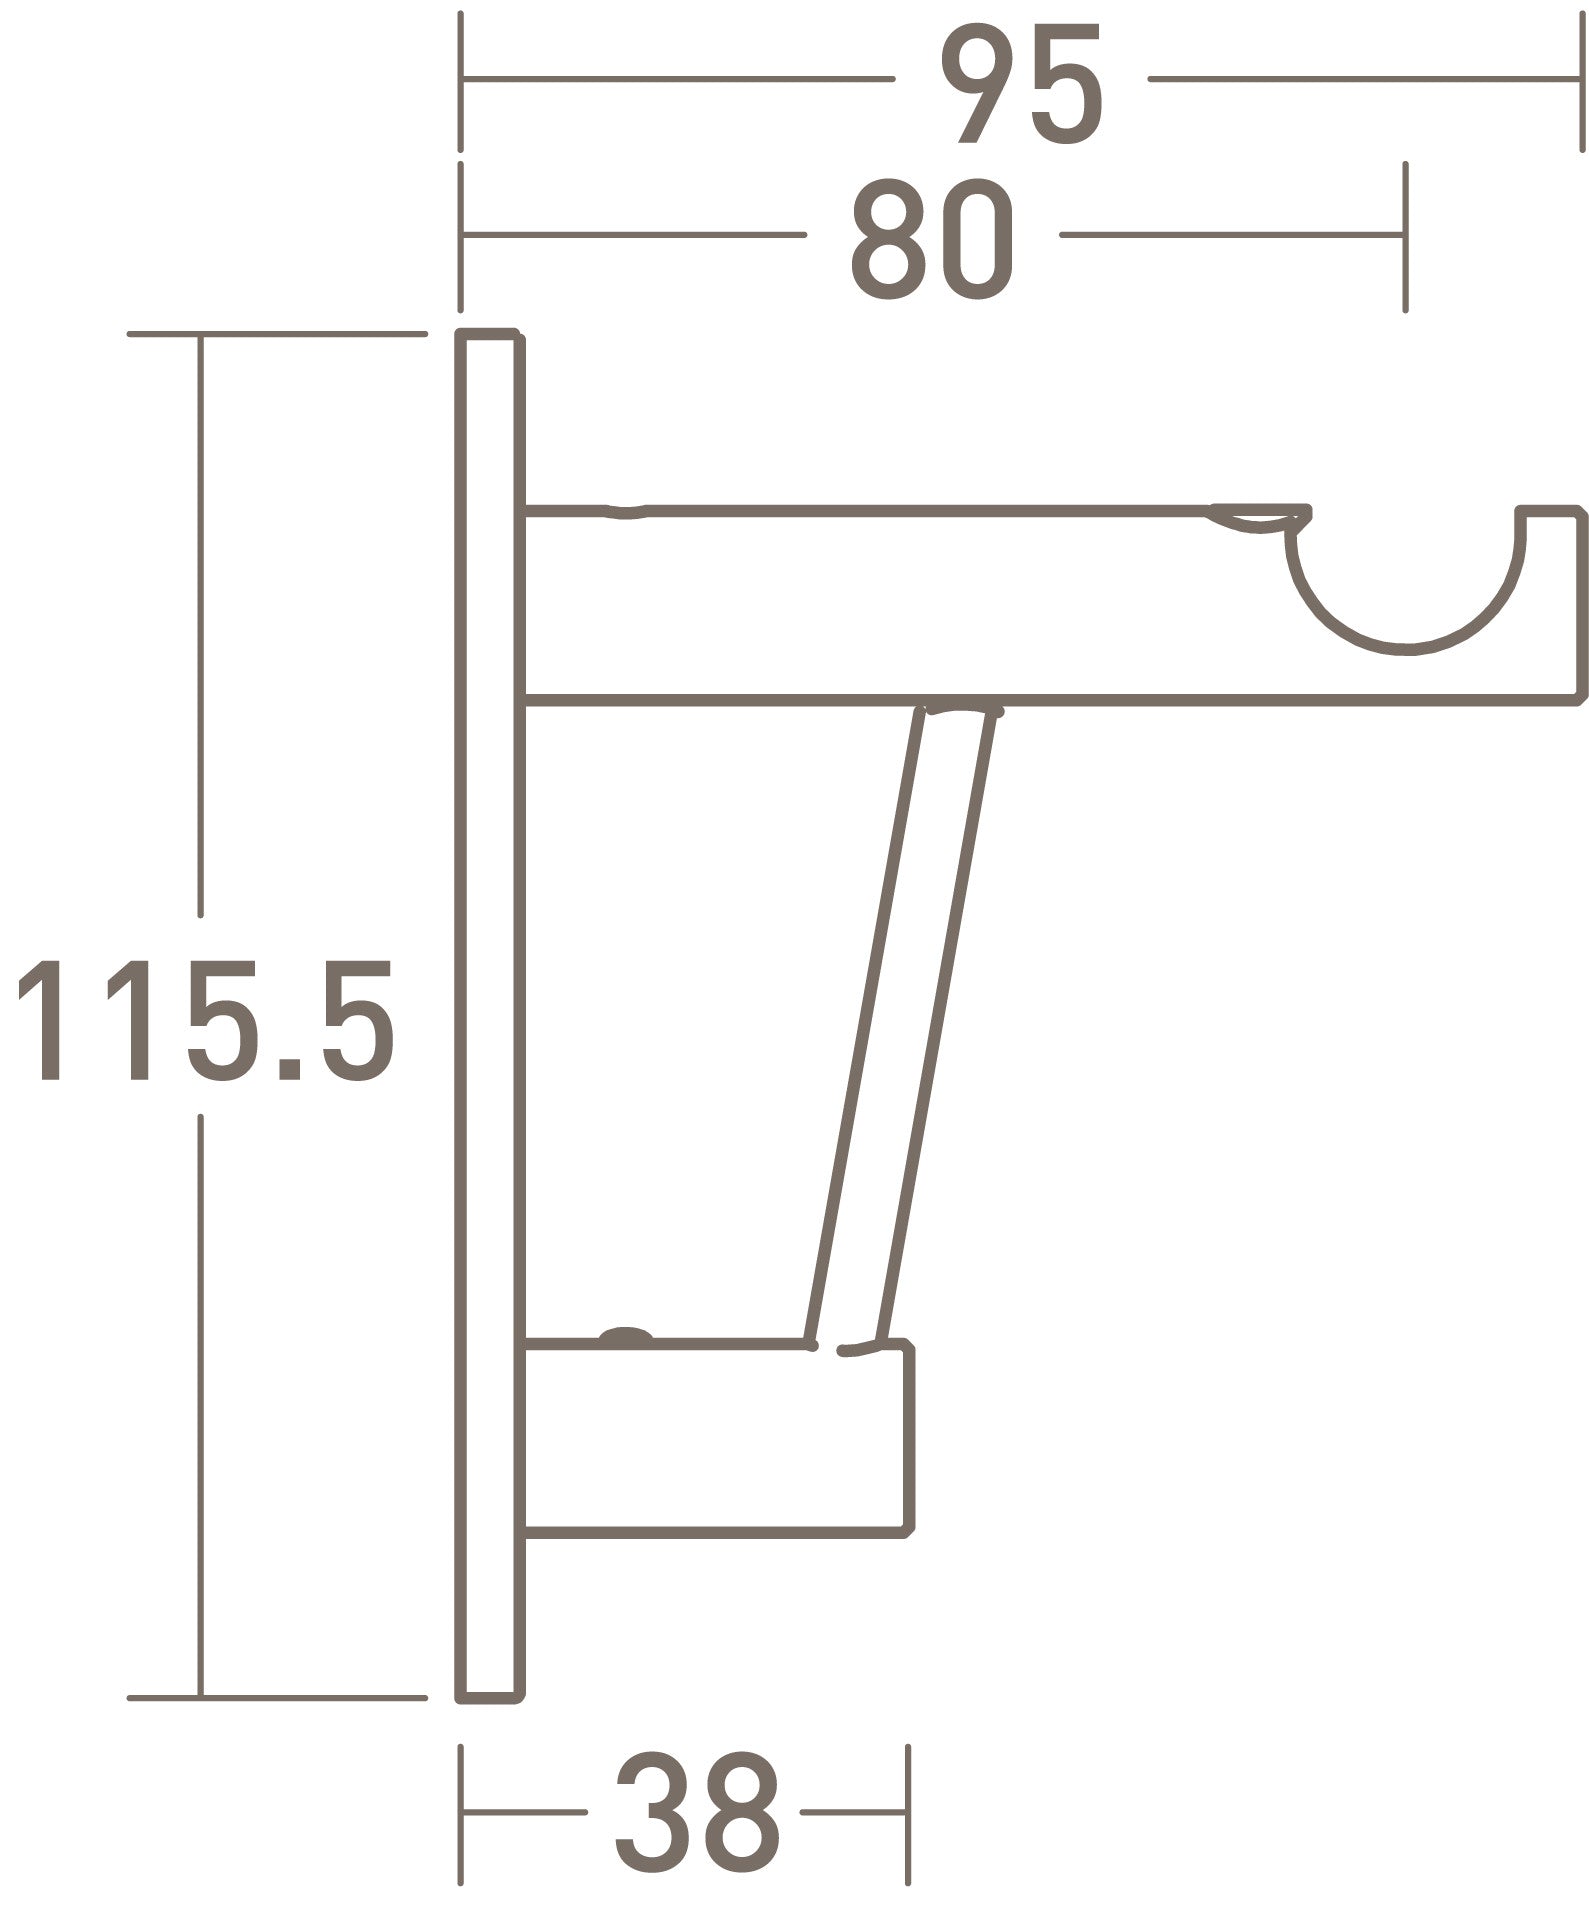 19mm stainless steel bracket dimensions